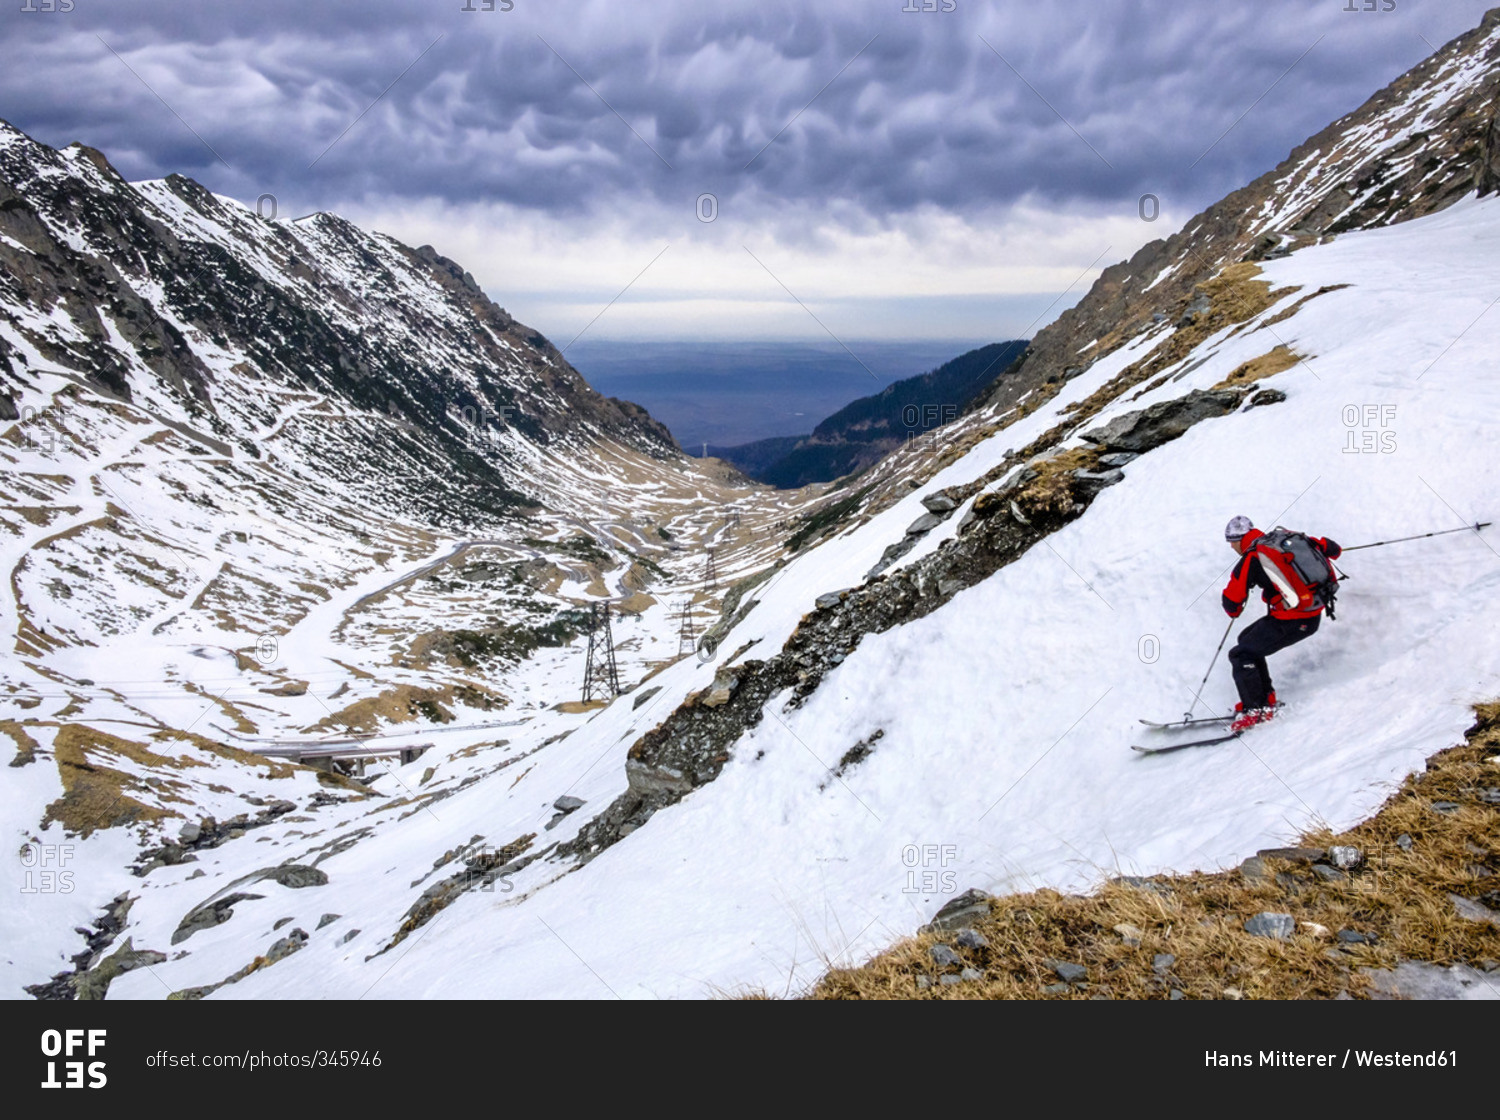 Romania, Southern Carpathians, Fagaras Mountains, skier in winter landscape